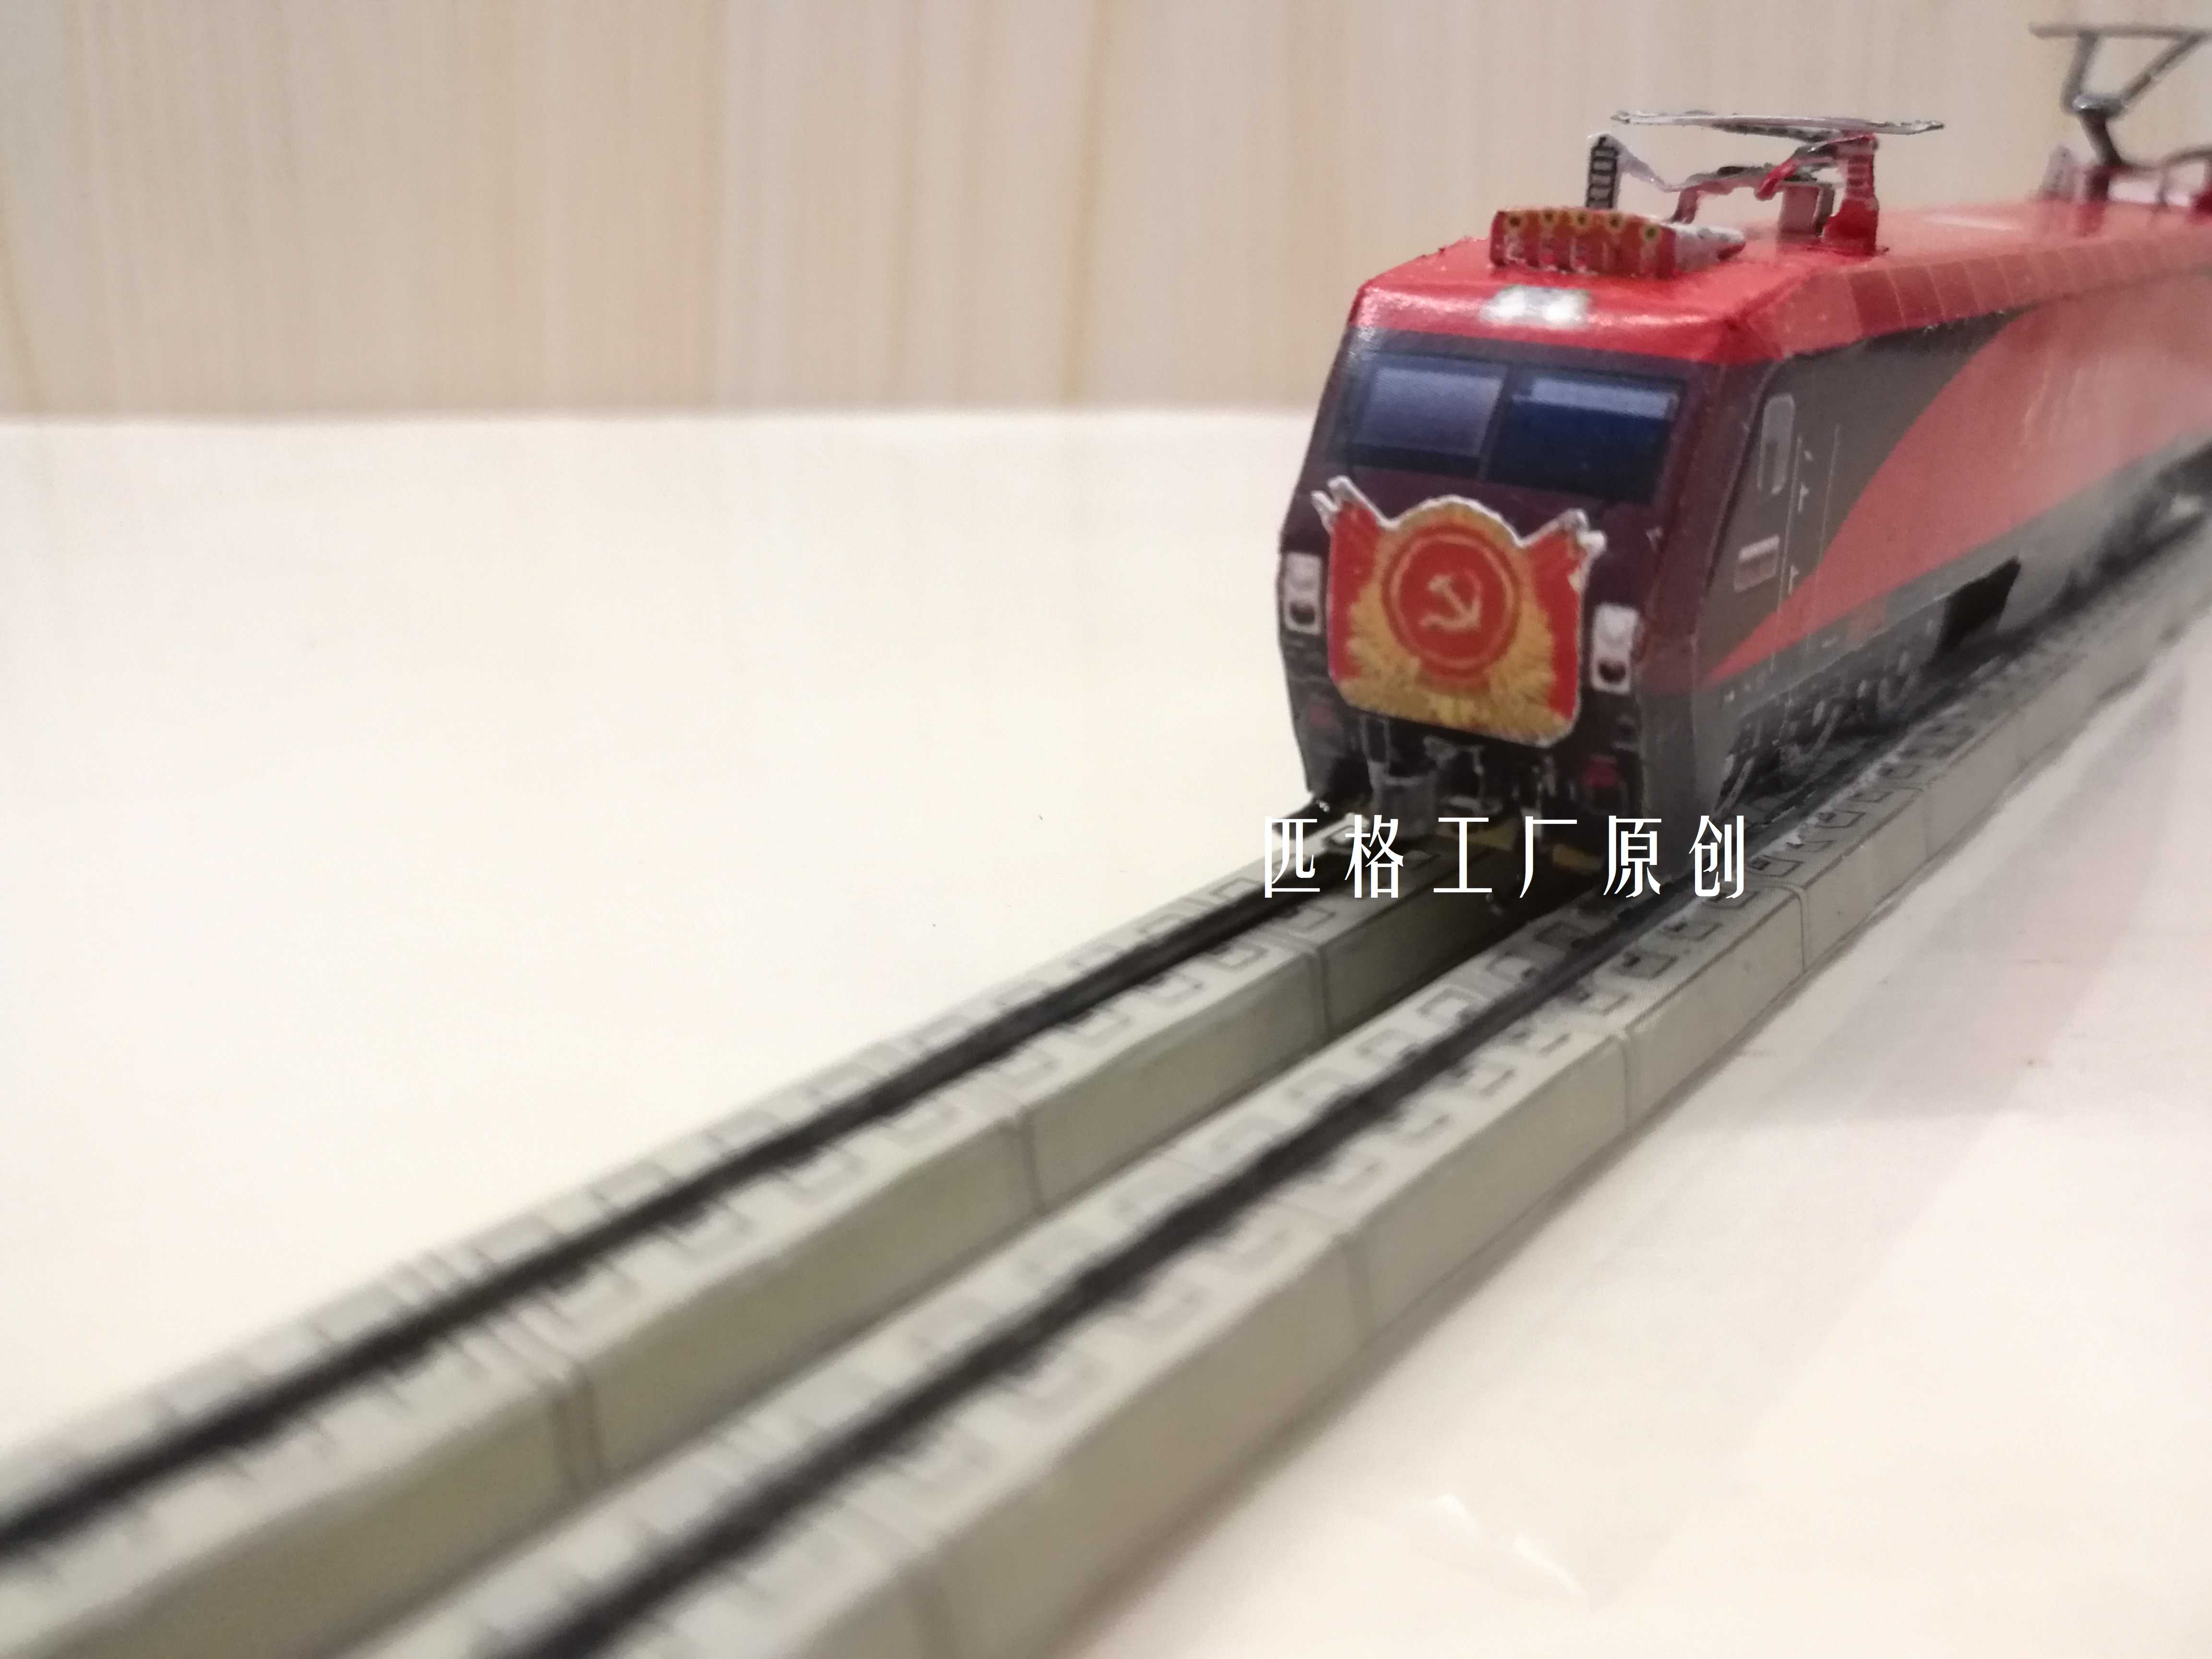 N比例共产党员号HXD3D电力机车3D纸模型DIY火车地铁高铁动车模型 - 图2